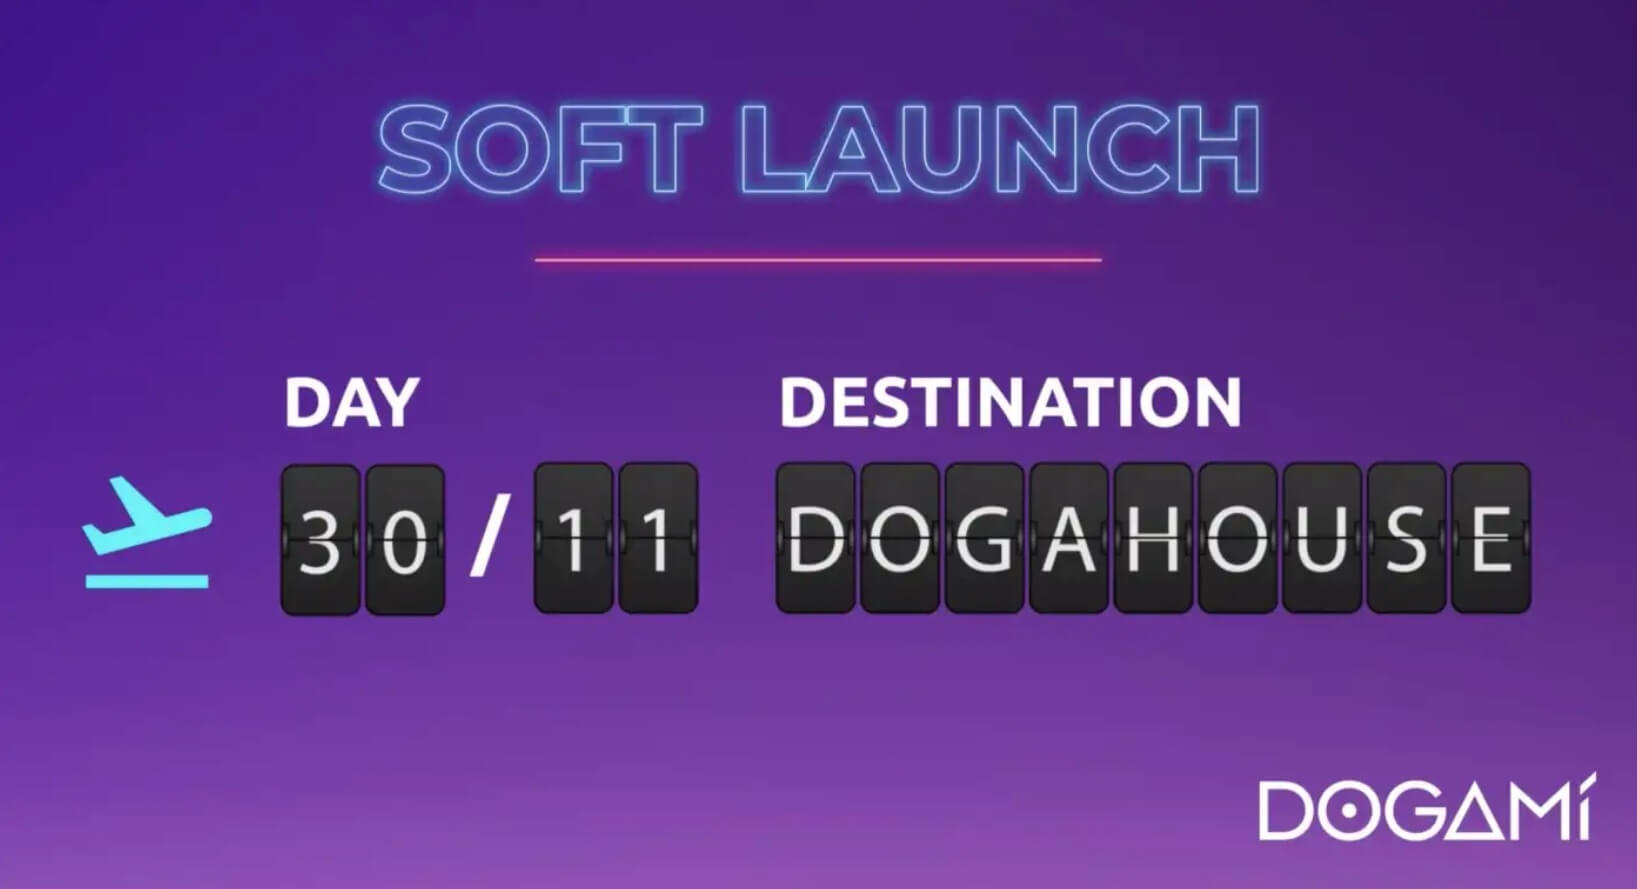 Dogamí Doga House Soft Launch